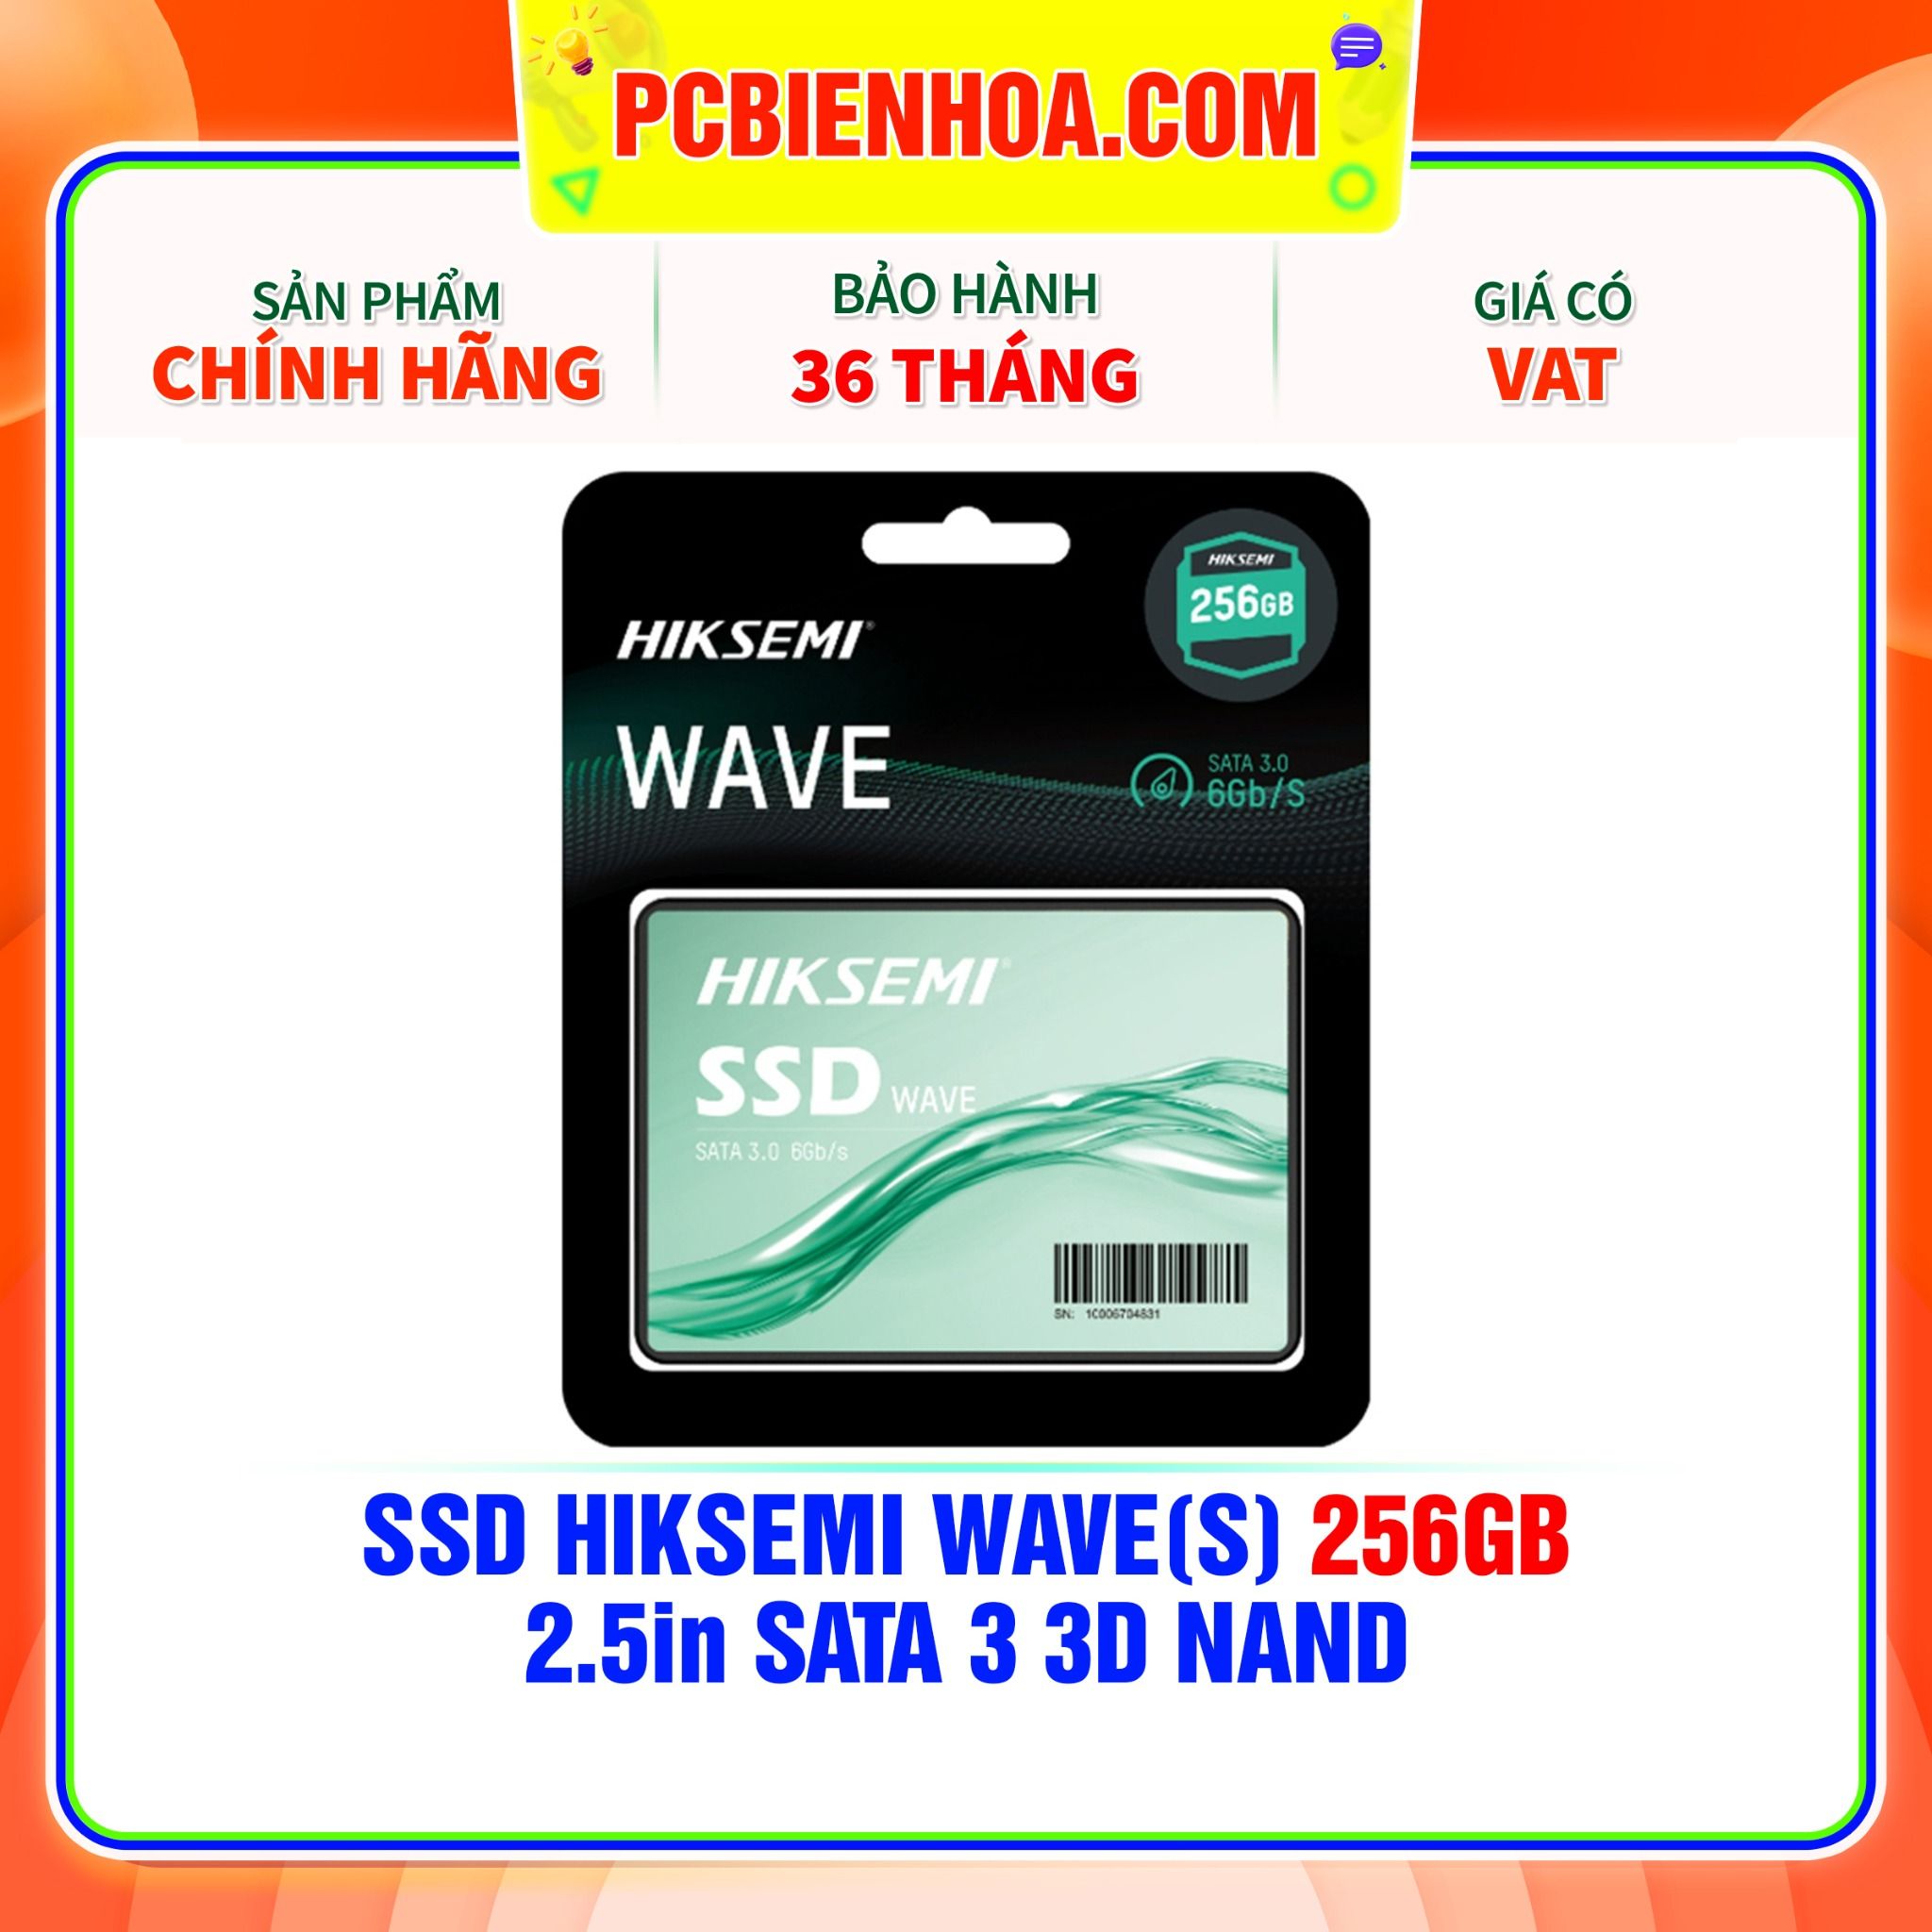  SSD HIKSEMI WAVE(S) 256GB - 2.5in SATA III 3D NAND 